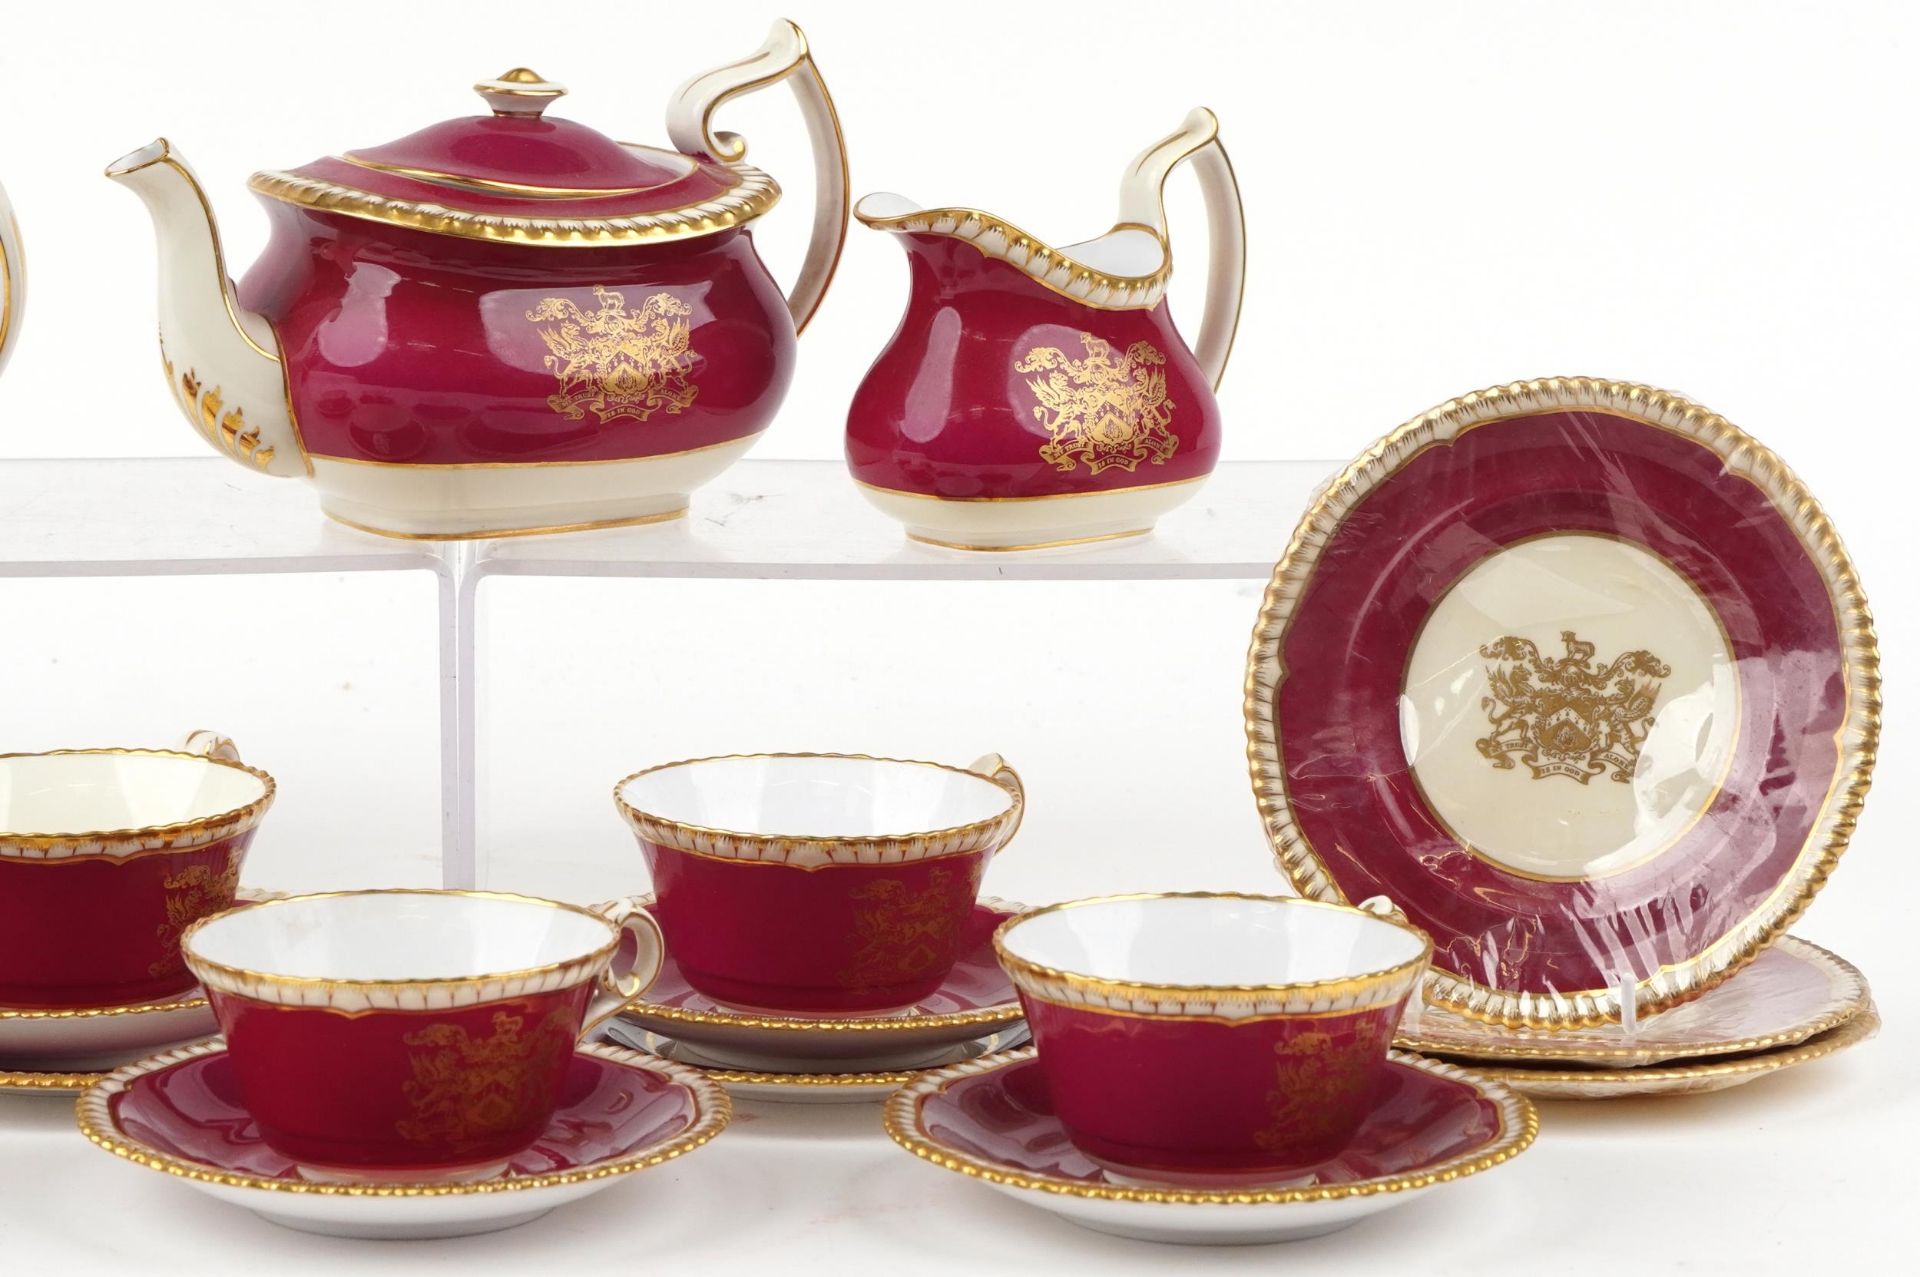 Spode six place tea service commemorating Elizabeth II 1953 Coronation comprising teapot, six trios, - Image 3 of 4